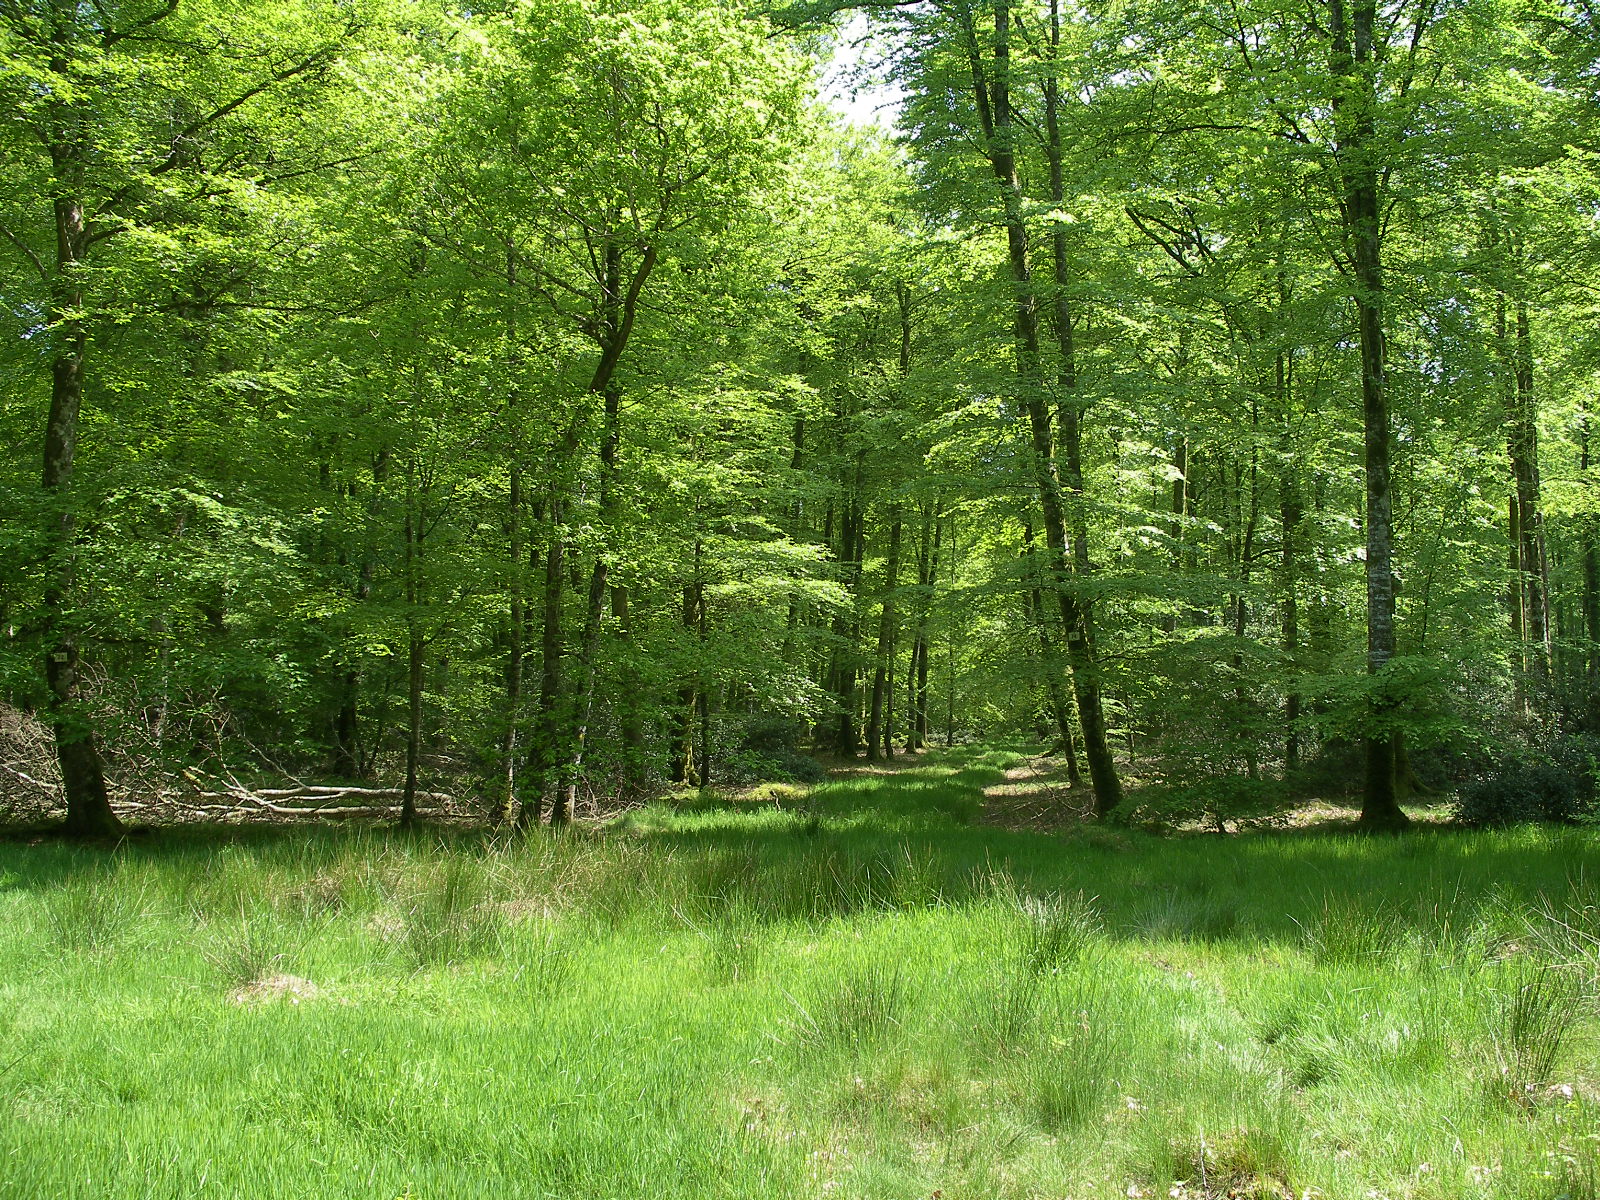 Cerisy Forest - Wikipedia